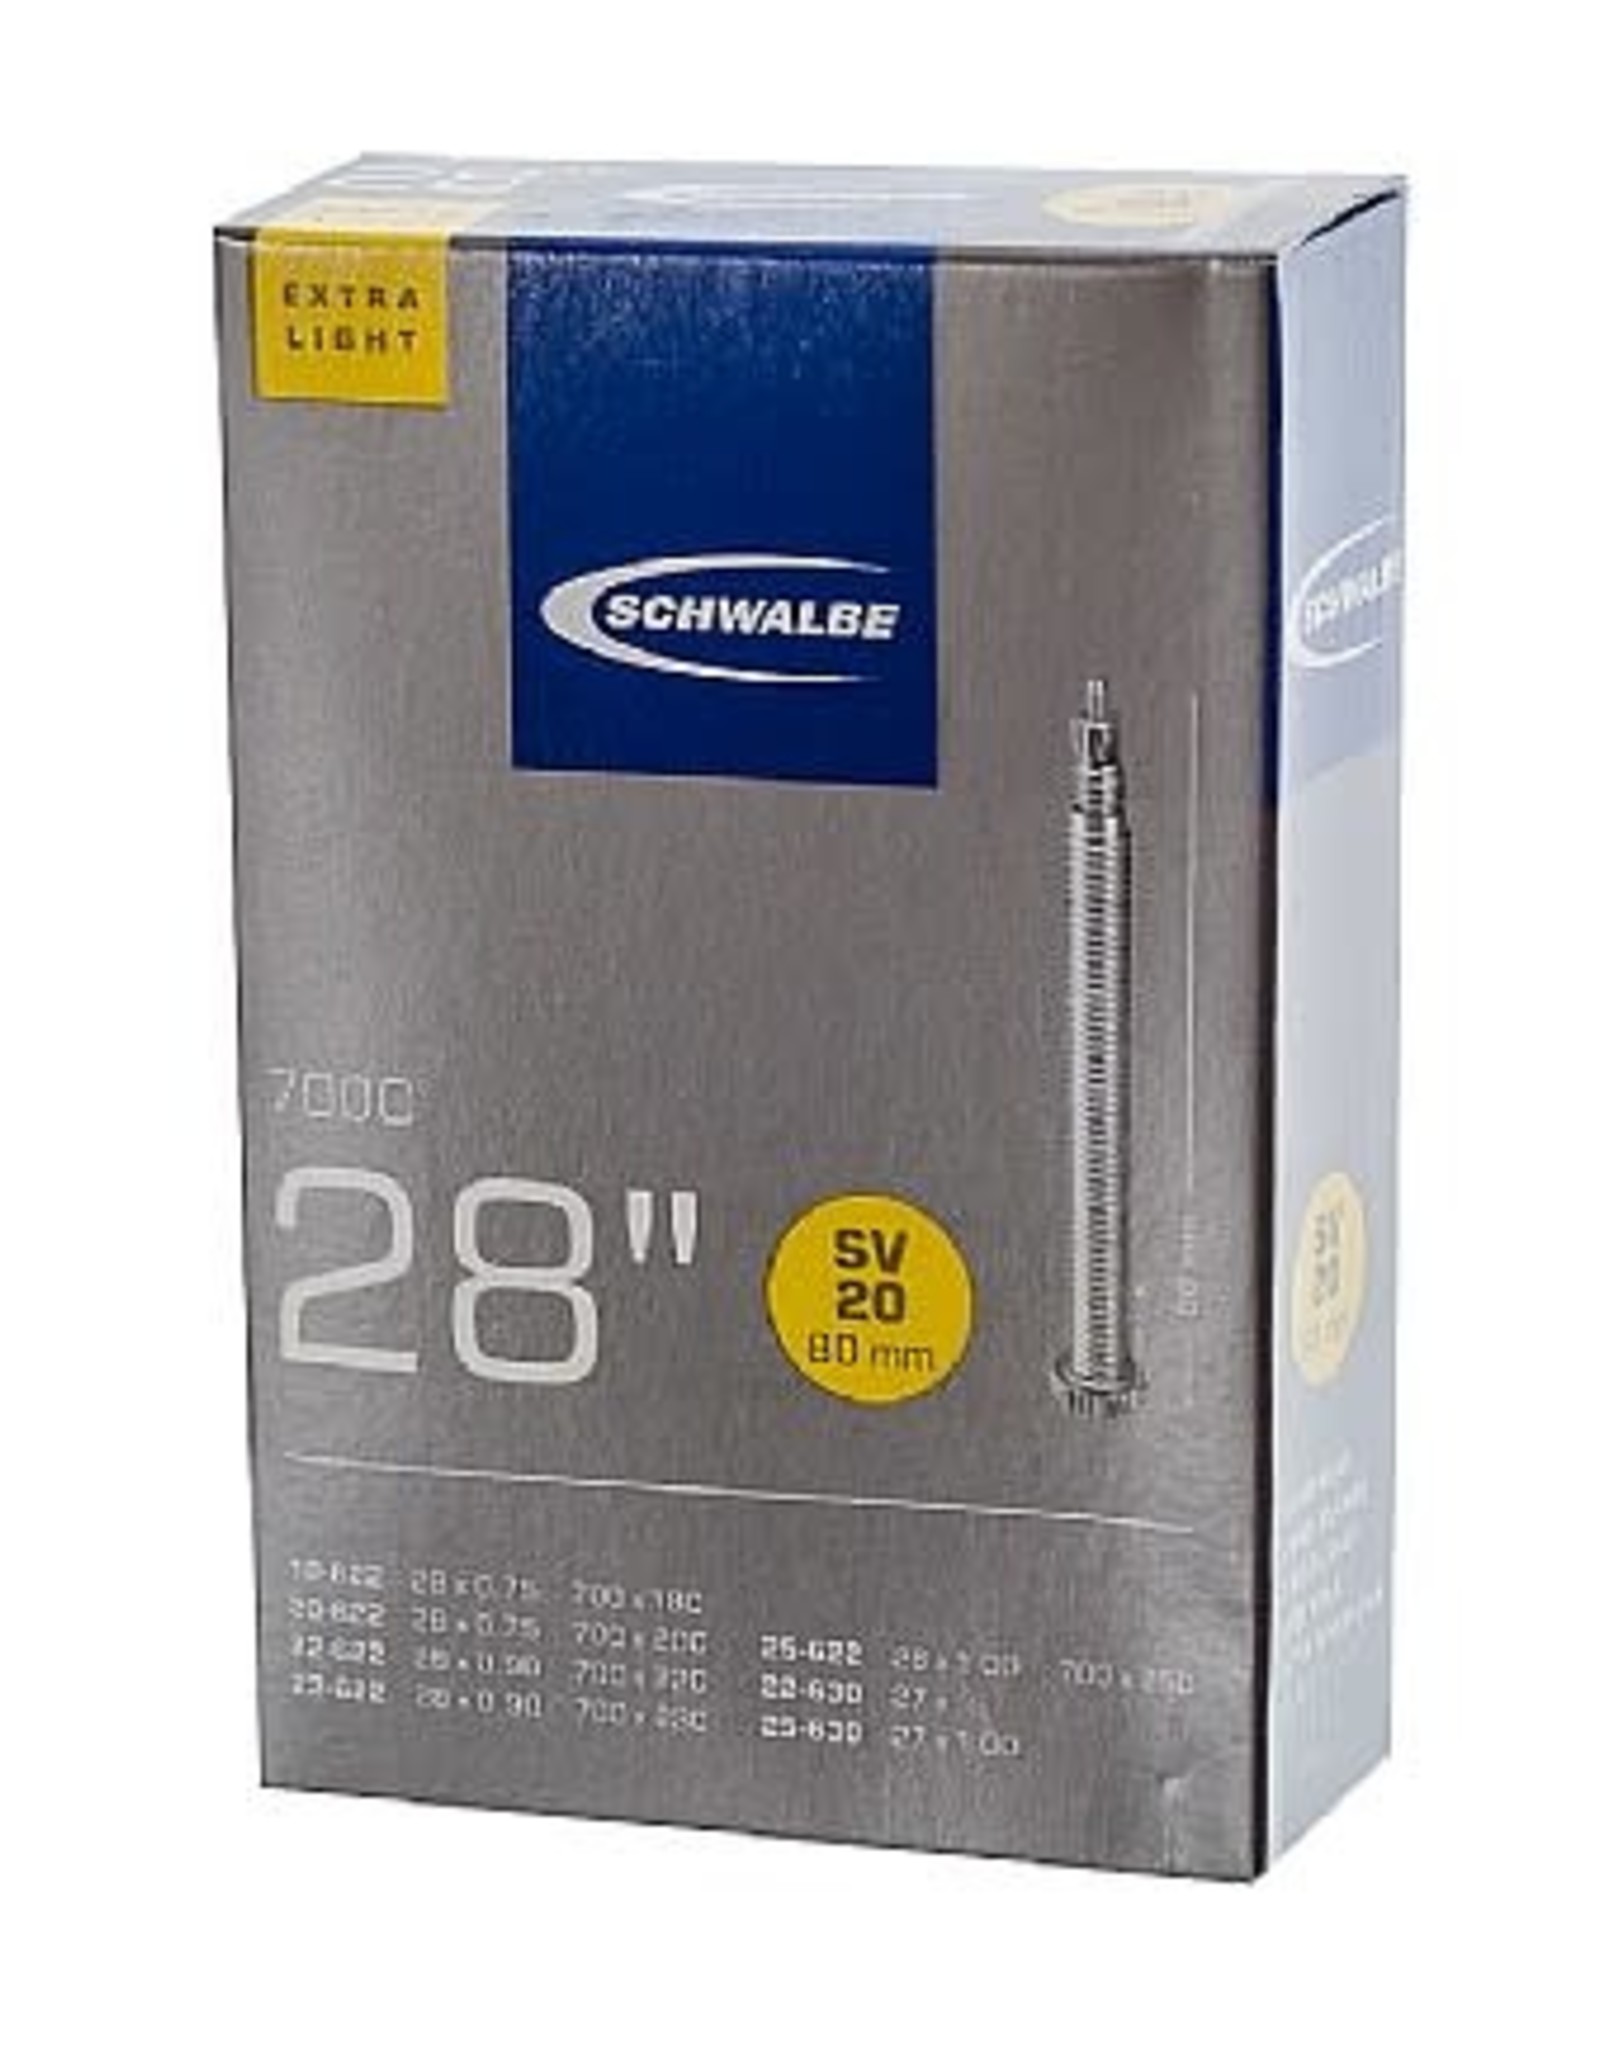 Schwalbe Schwalbe Extra Light Tube - 700 x 18-25mm, 80mm, Presta Valve